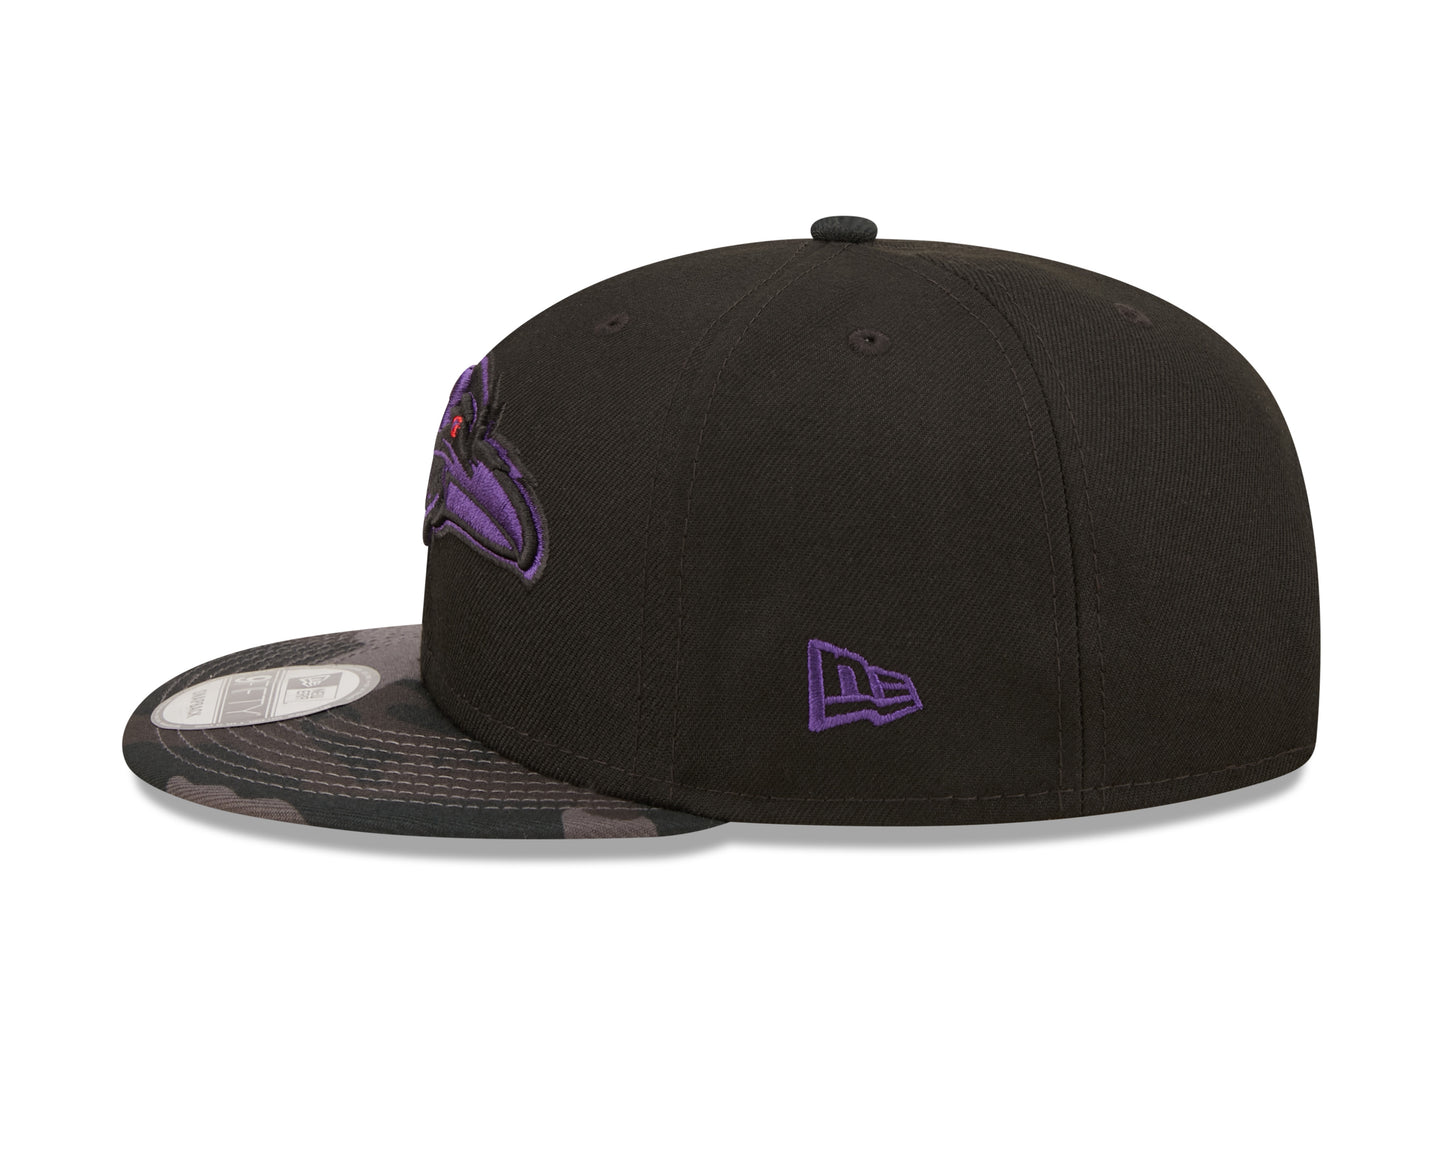 Baltimore Ravens NFL New Era Camo Vize 9FIFTY Snapback Hat - Black